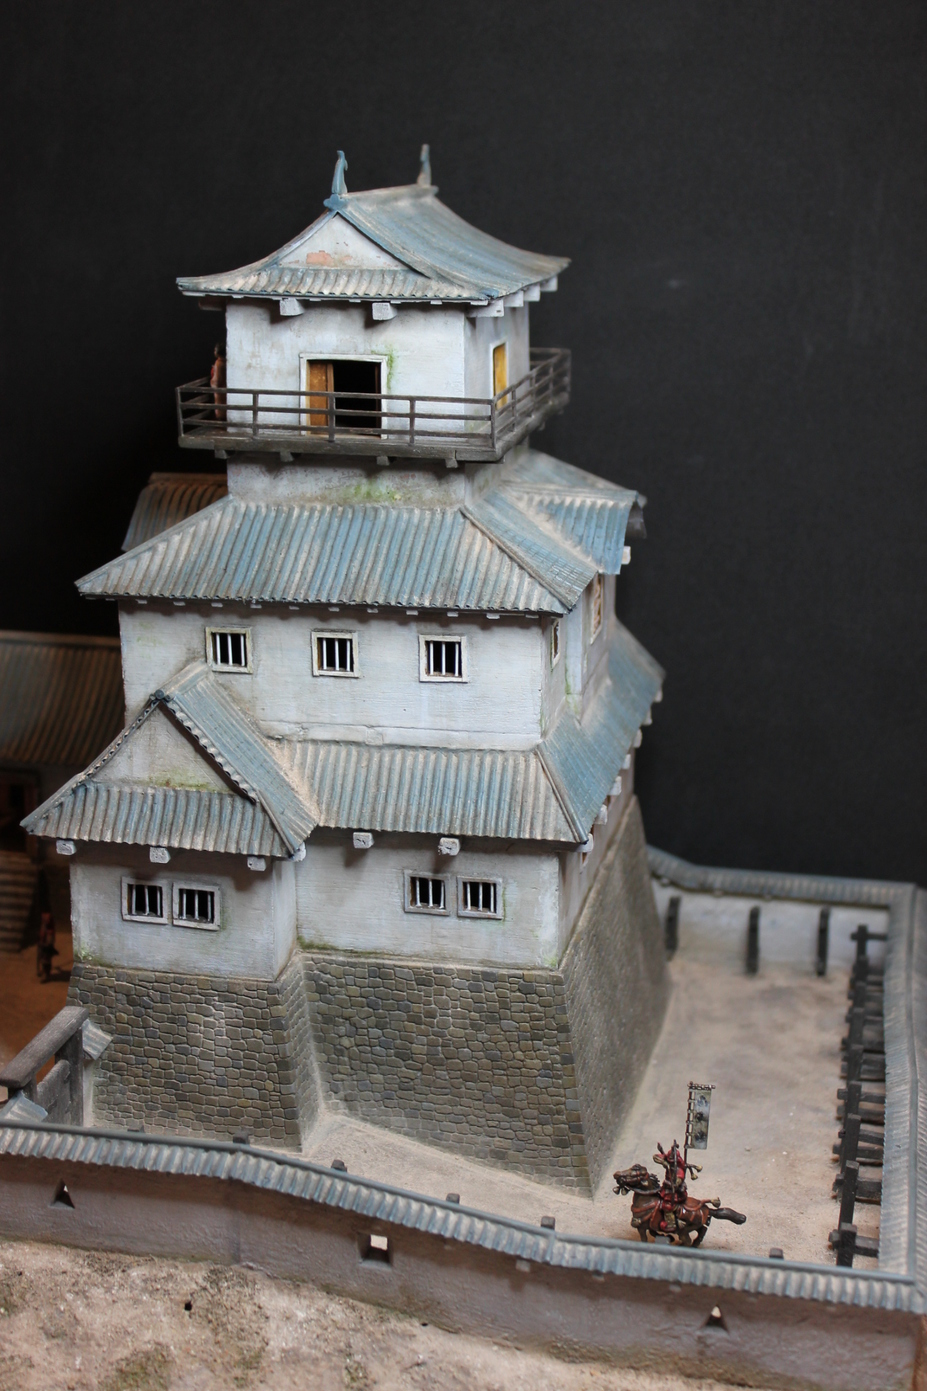 Kakegawa castle. 1600. Scale 1/72. Small 2